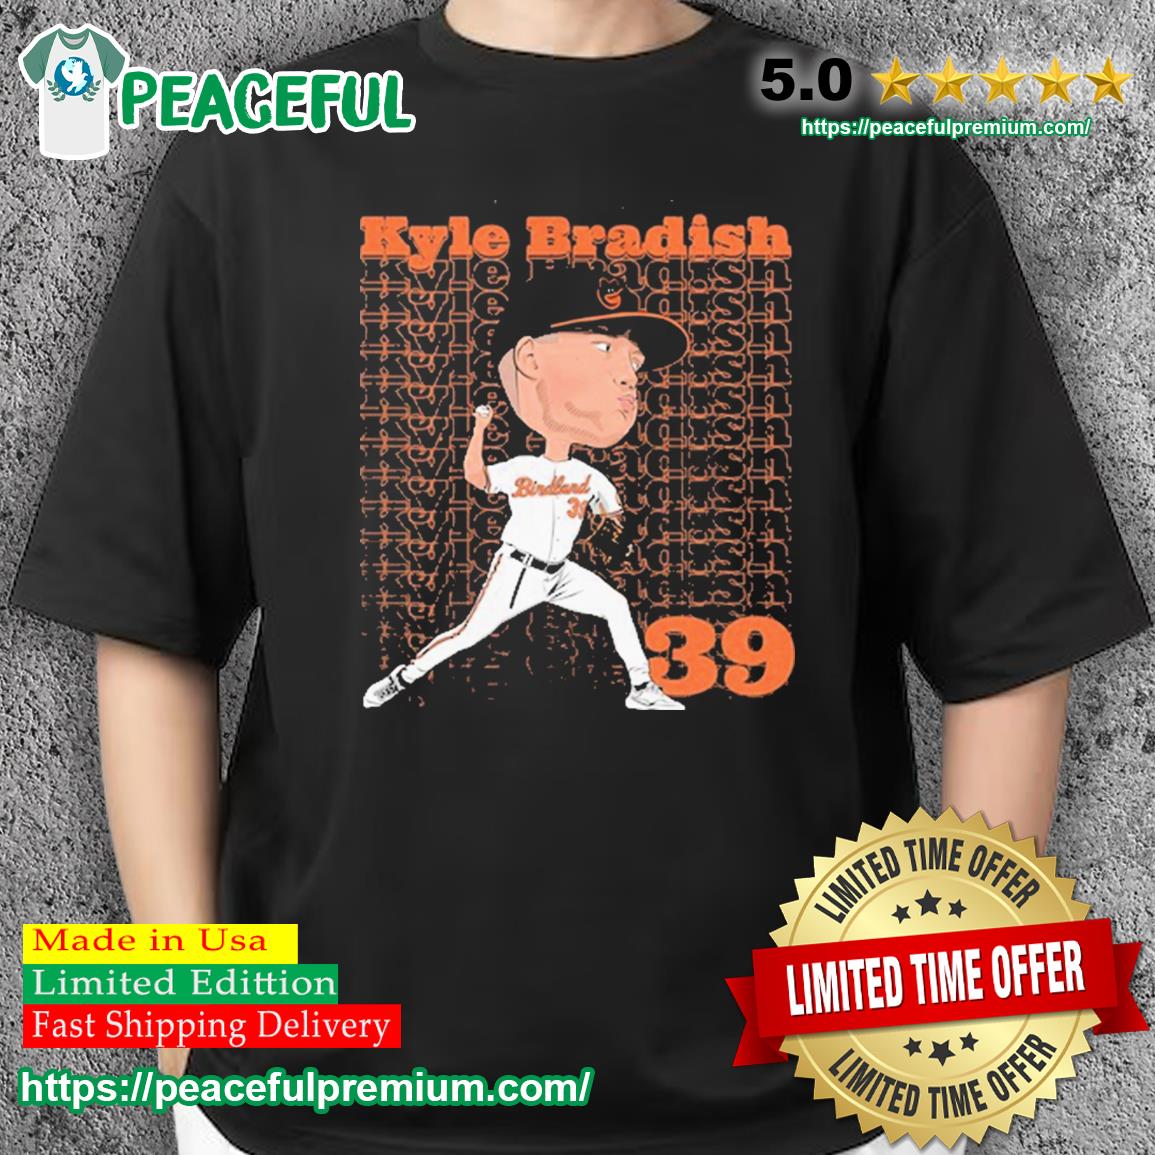 Kyle Bradish 39 Baltimore Orioles shirt, hoodie, sweater, long